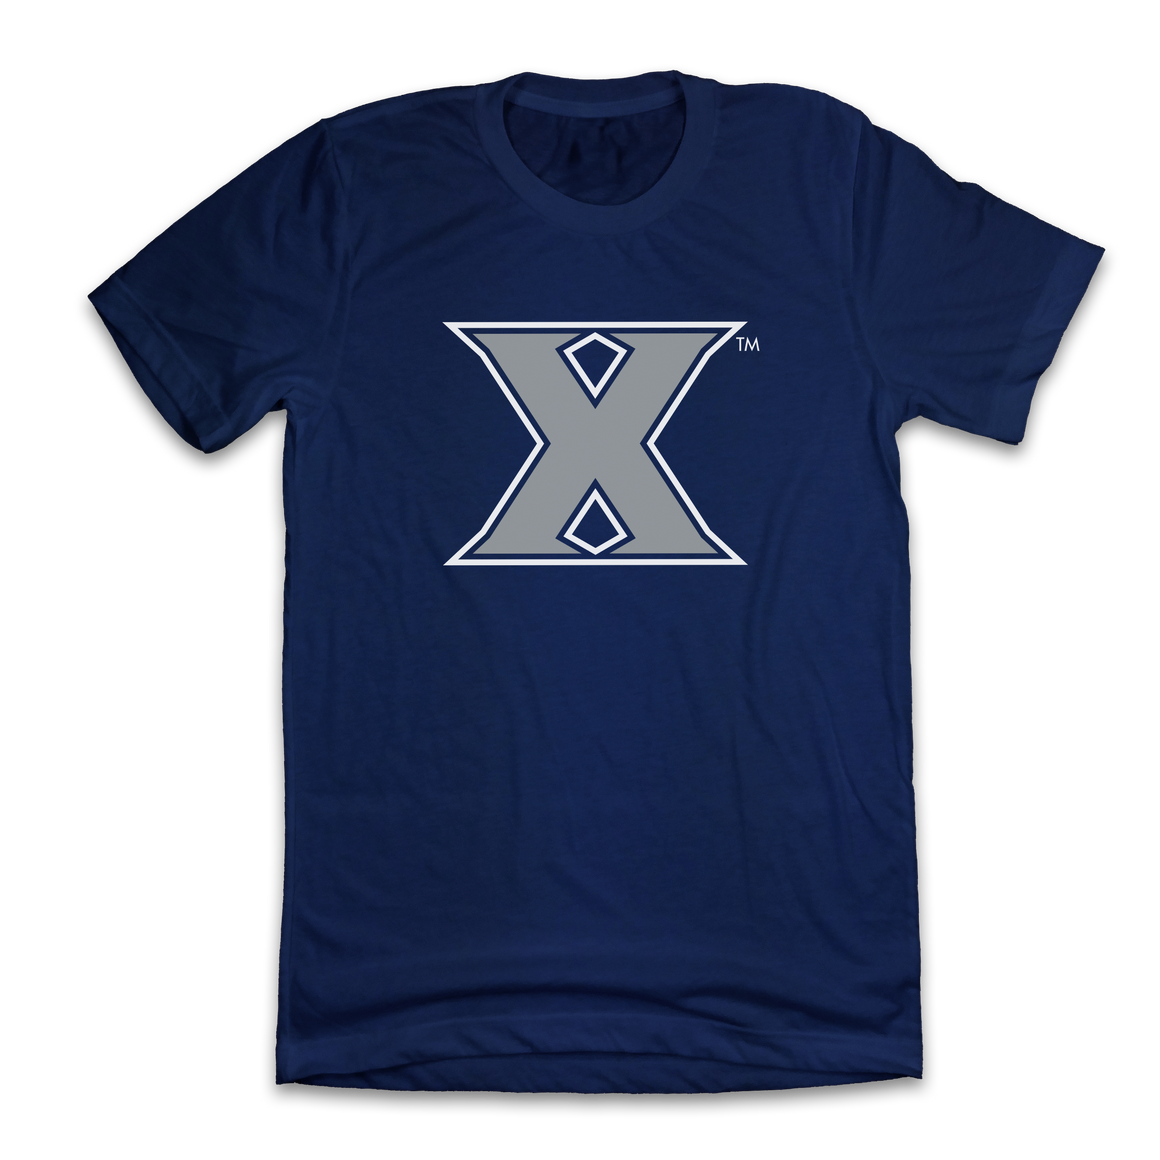 Xavier "X" - Cincy Shirts